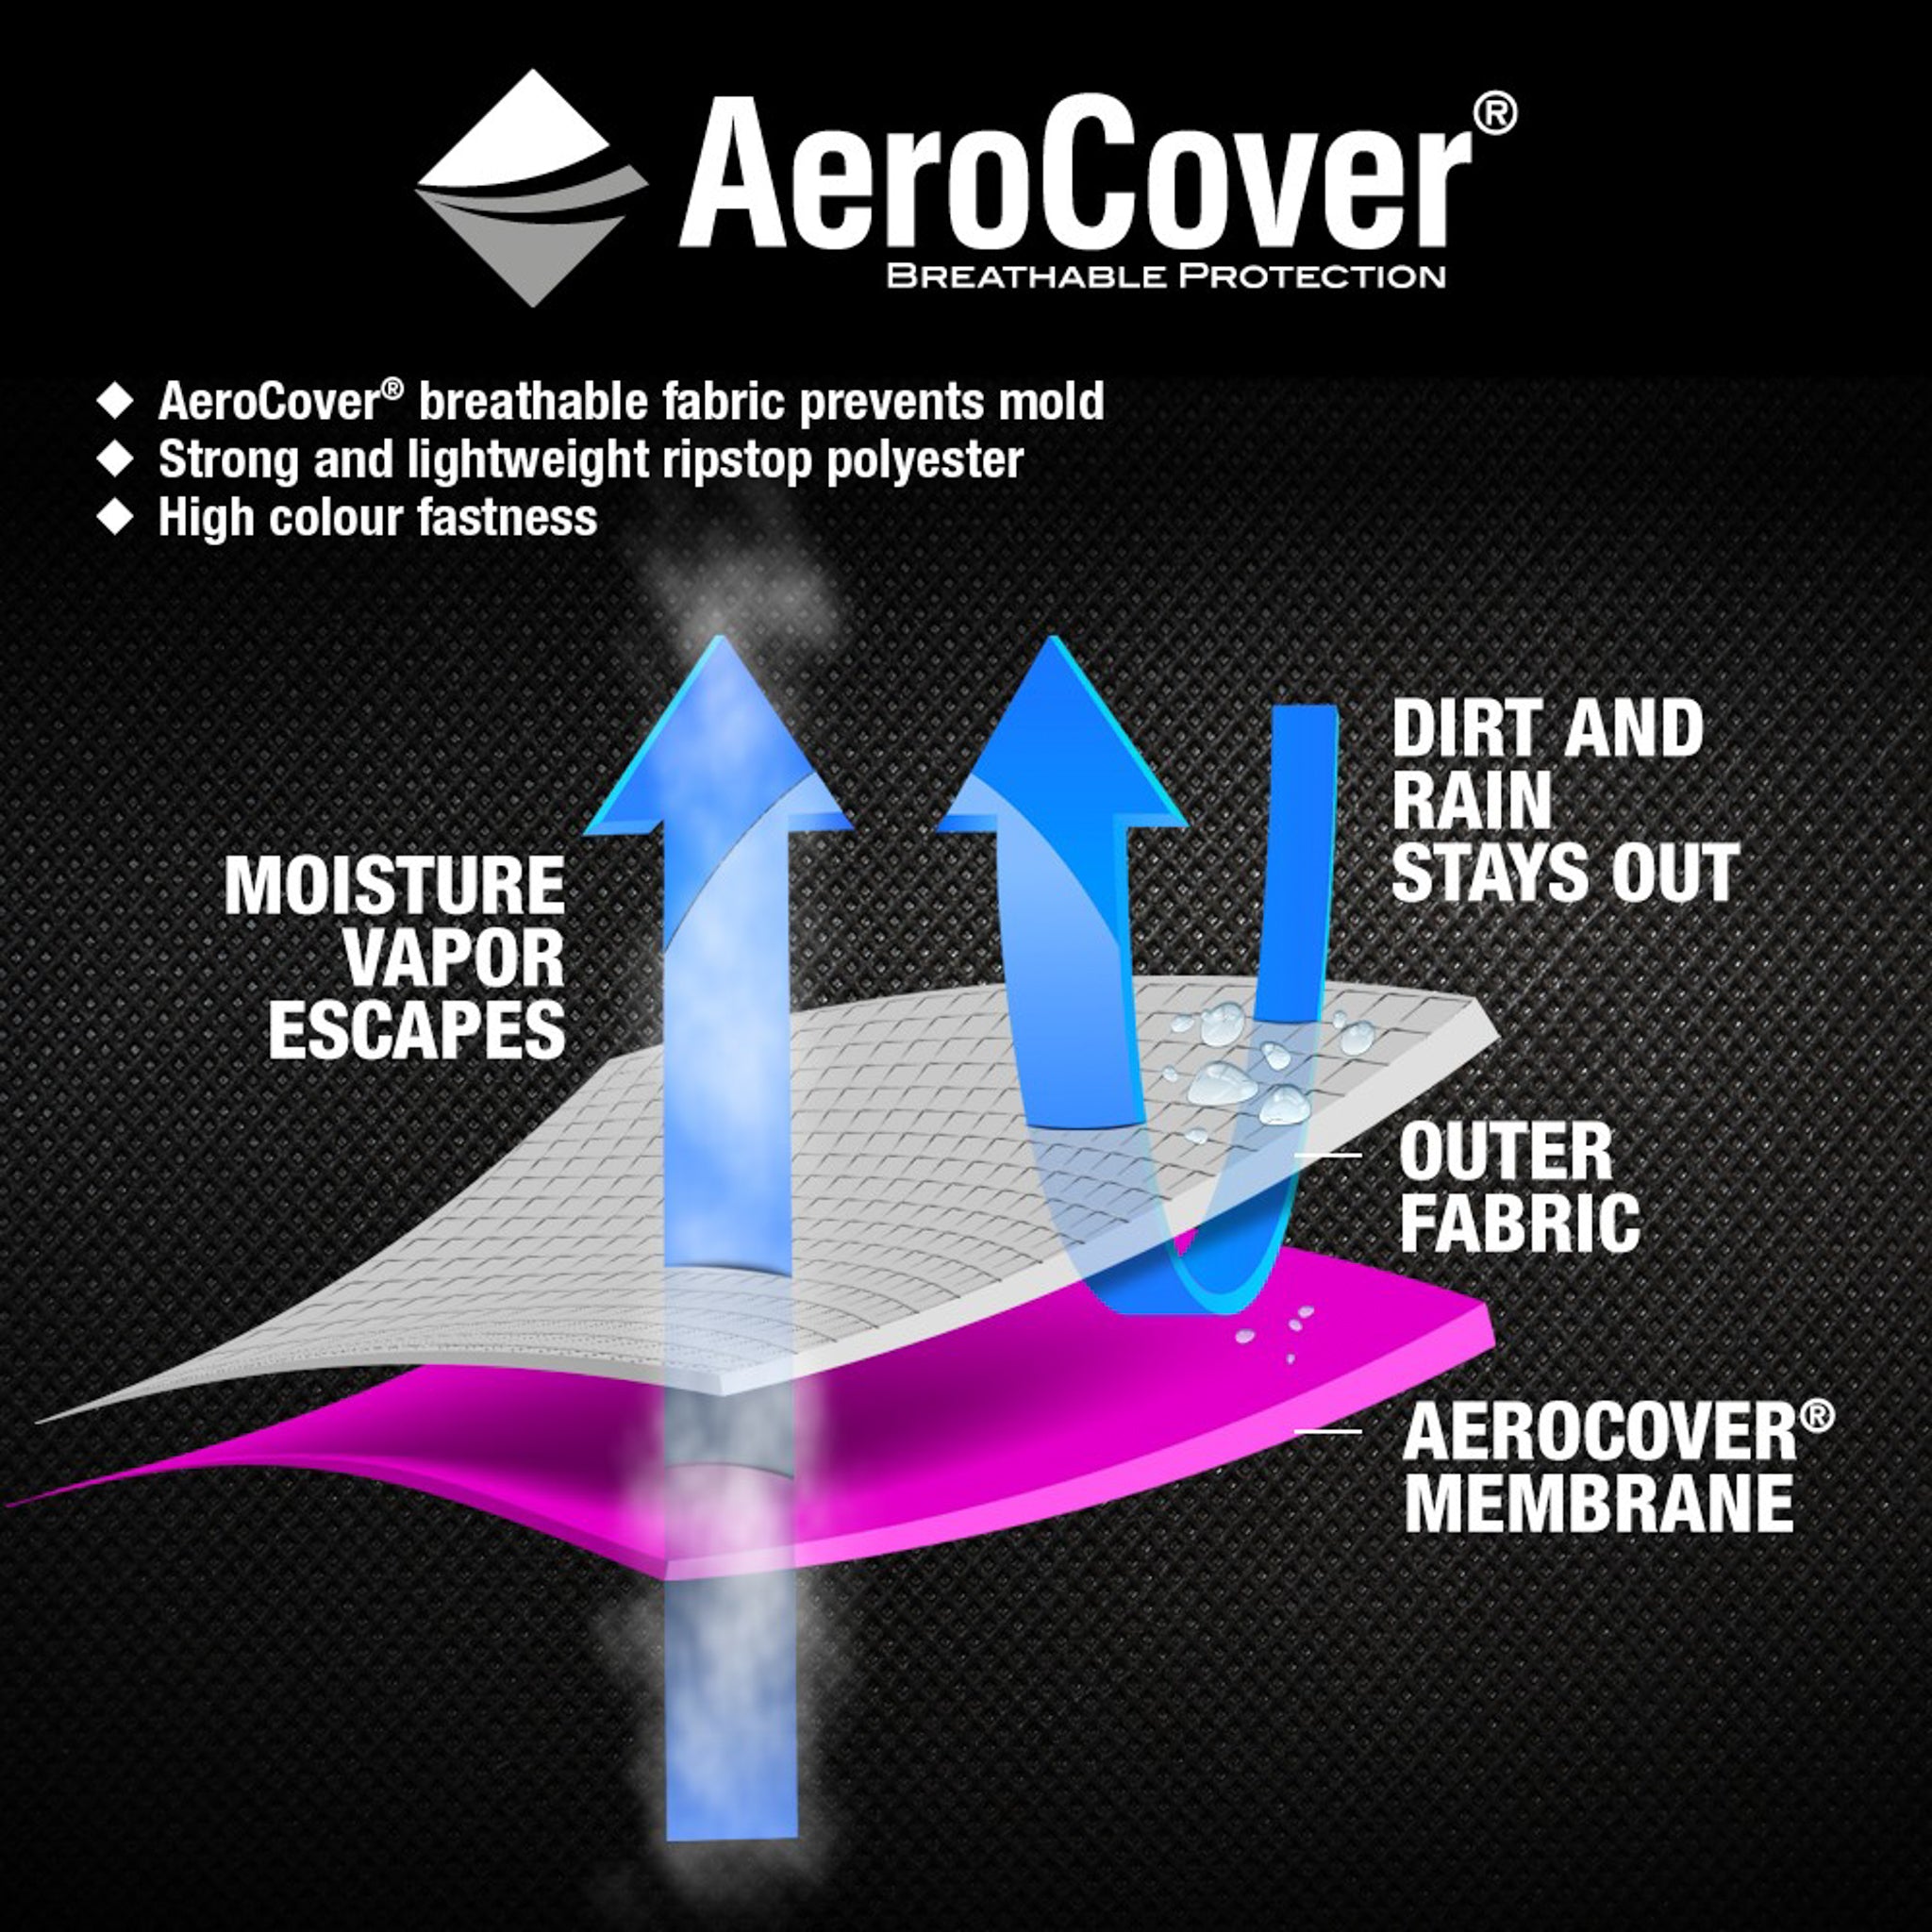 AeroCover - Firetable 60x60x45cm high